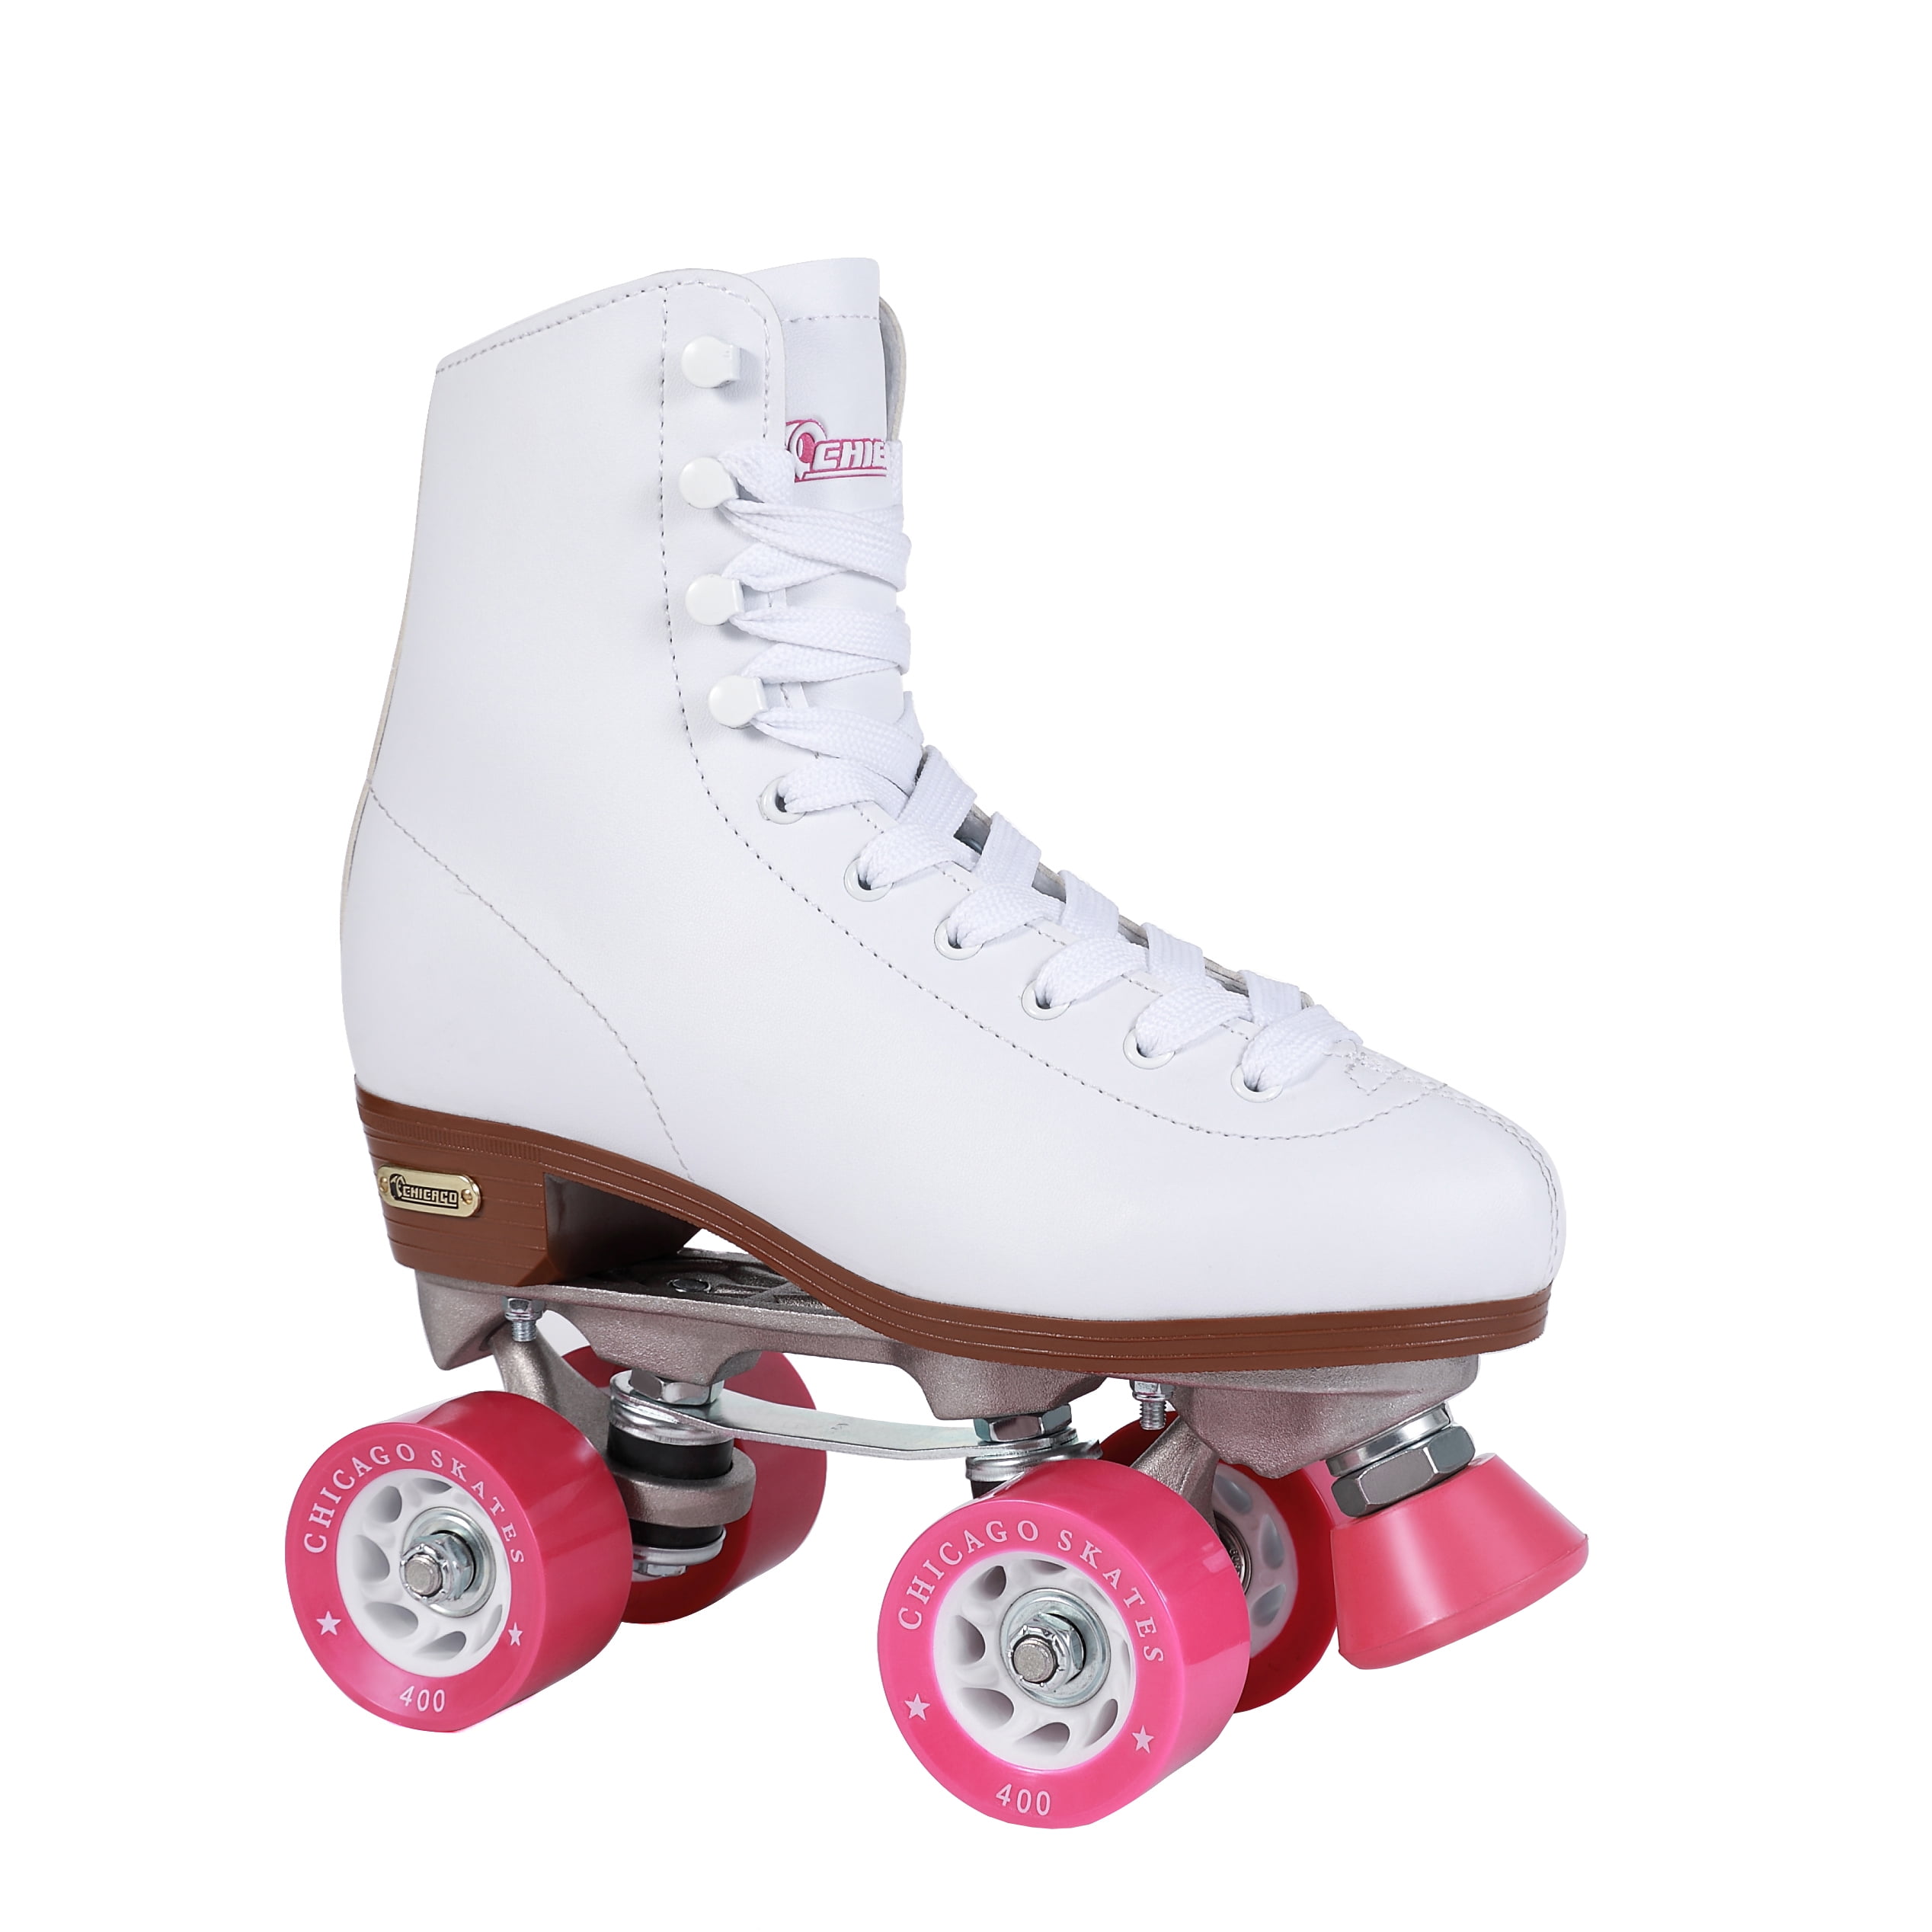 PlayWheels Heel Wheels Skates - Walmart.com